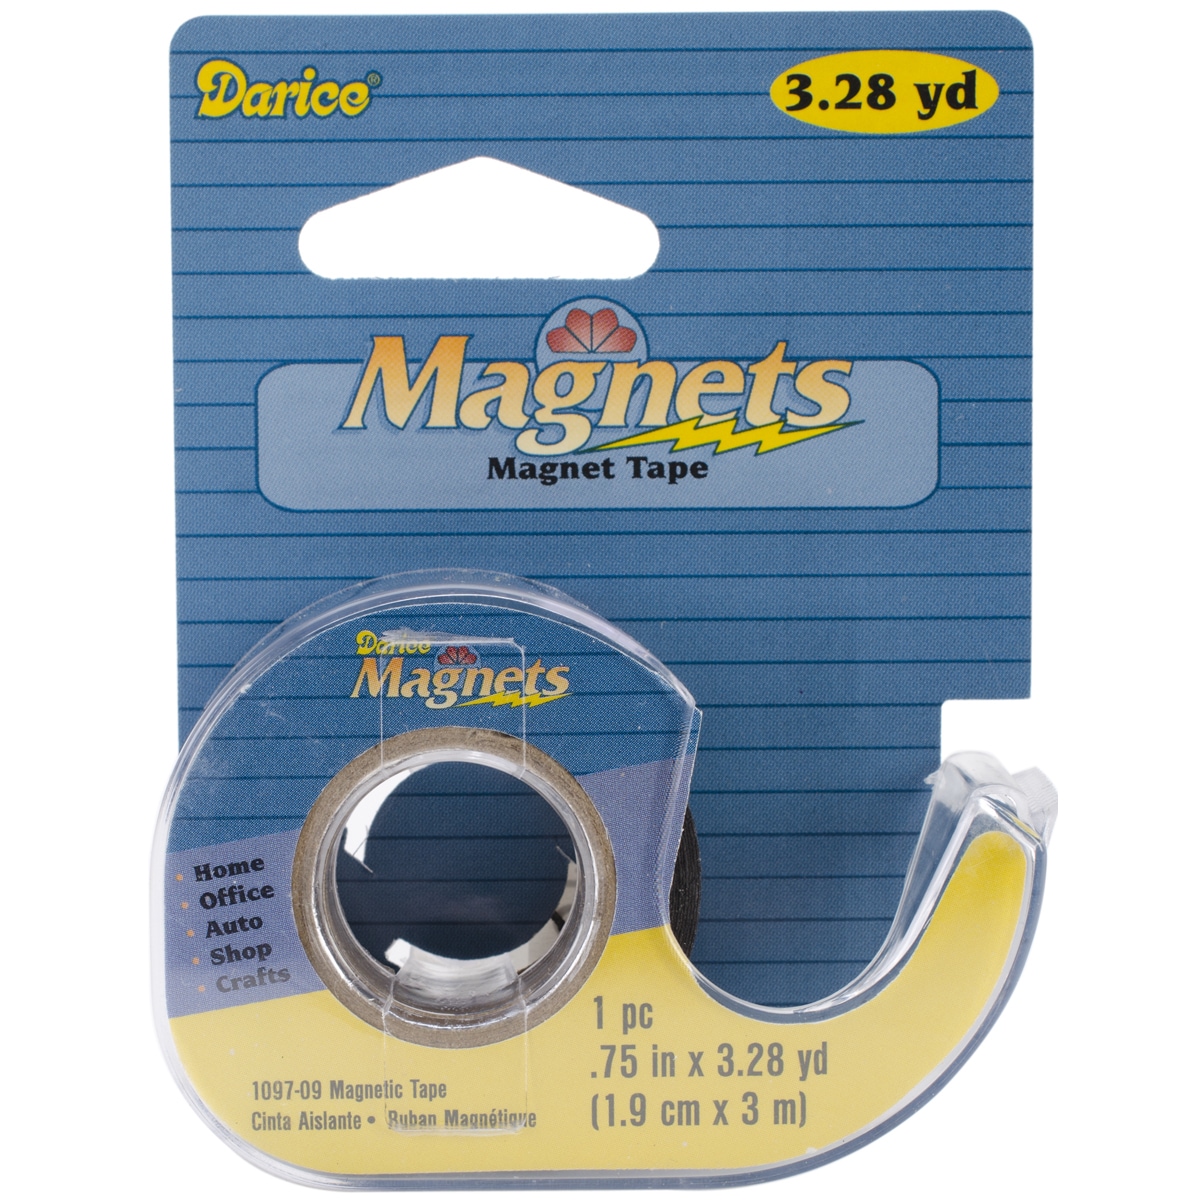 The Magnet Source Magnet Tape in Dispenser